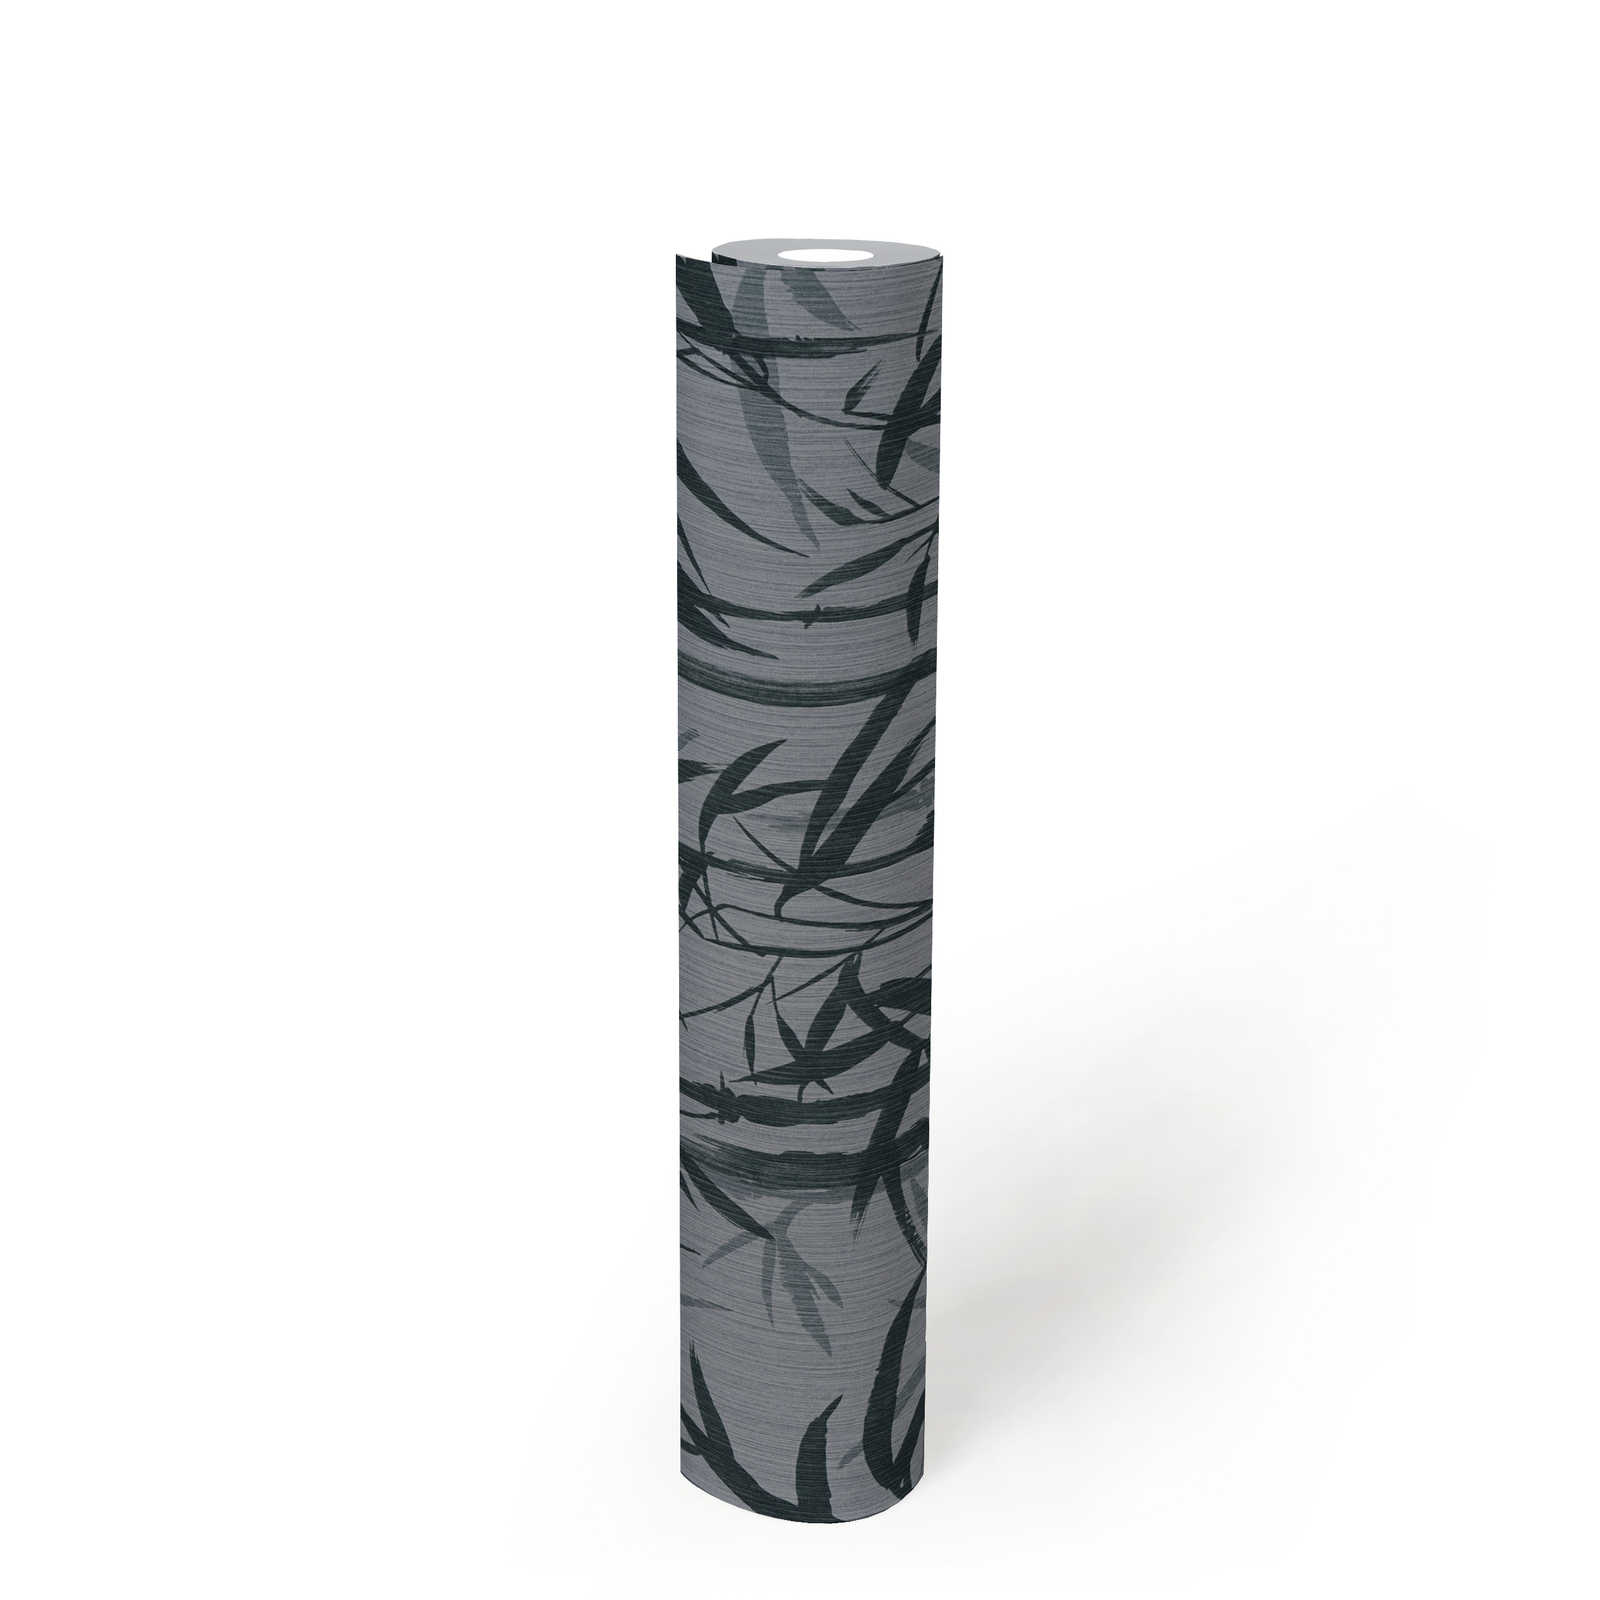             Carta da parati in tessuto non tessuto MICHALSKY motivo bambù naturale - grigio, nero
        